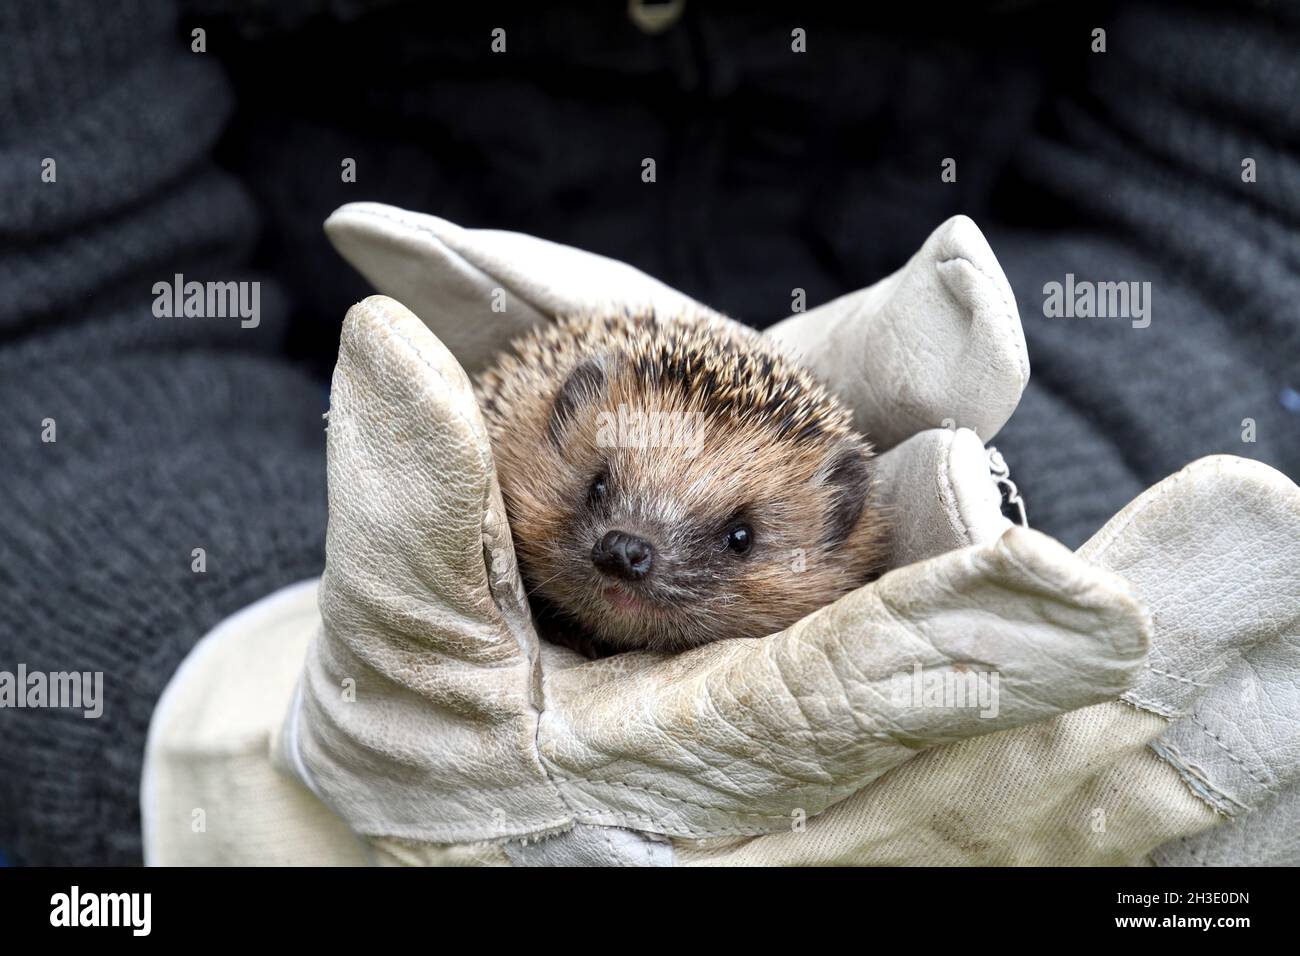 Hedgehog occidentale, hedgehog europeo (Erinaceus europaeus), in mani guanti, salvataggio di animali, Germania Foto Stock